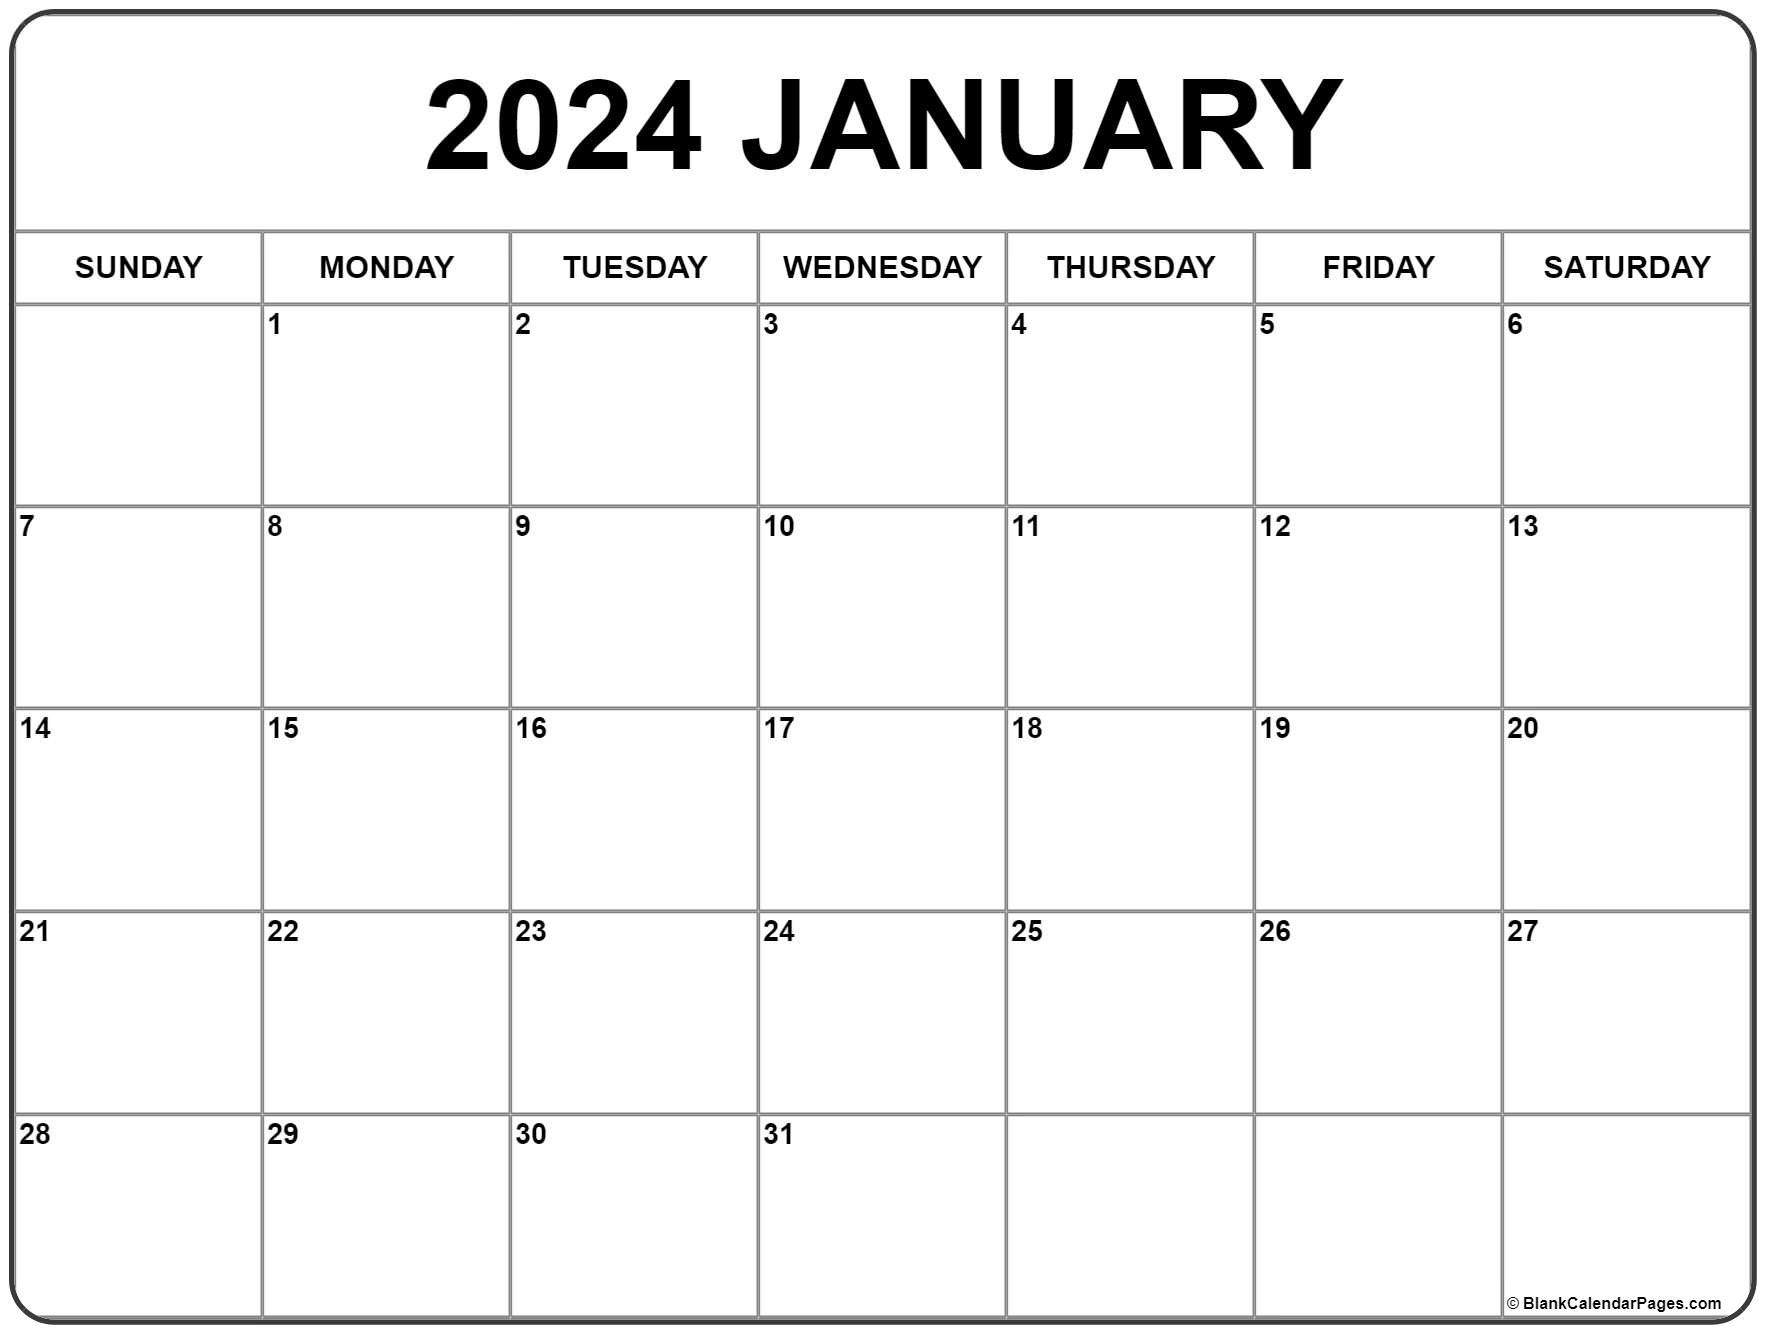 January 2024 Calendar | Free Printable Calendar | Free Printable Calendar 2024 January